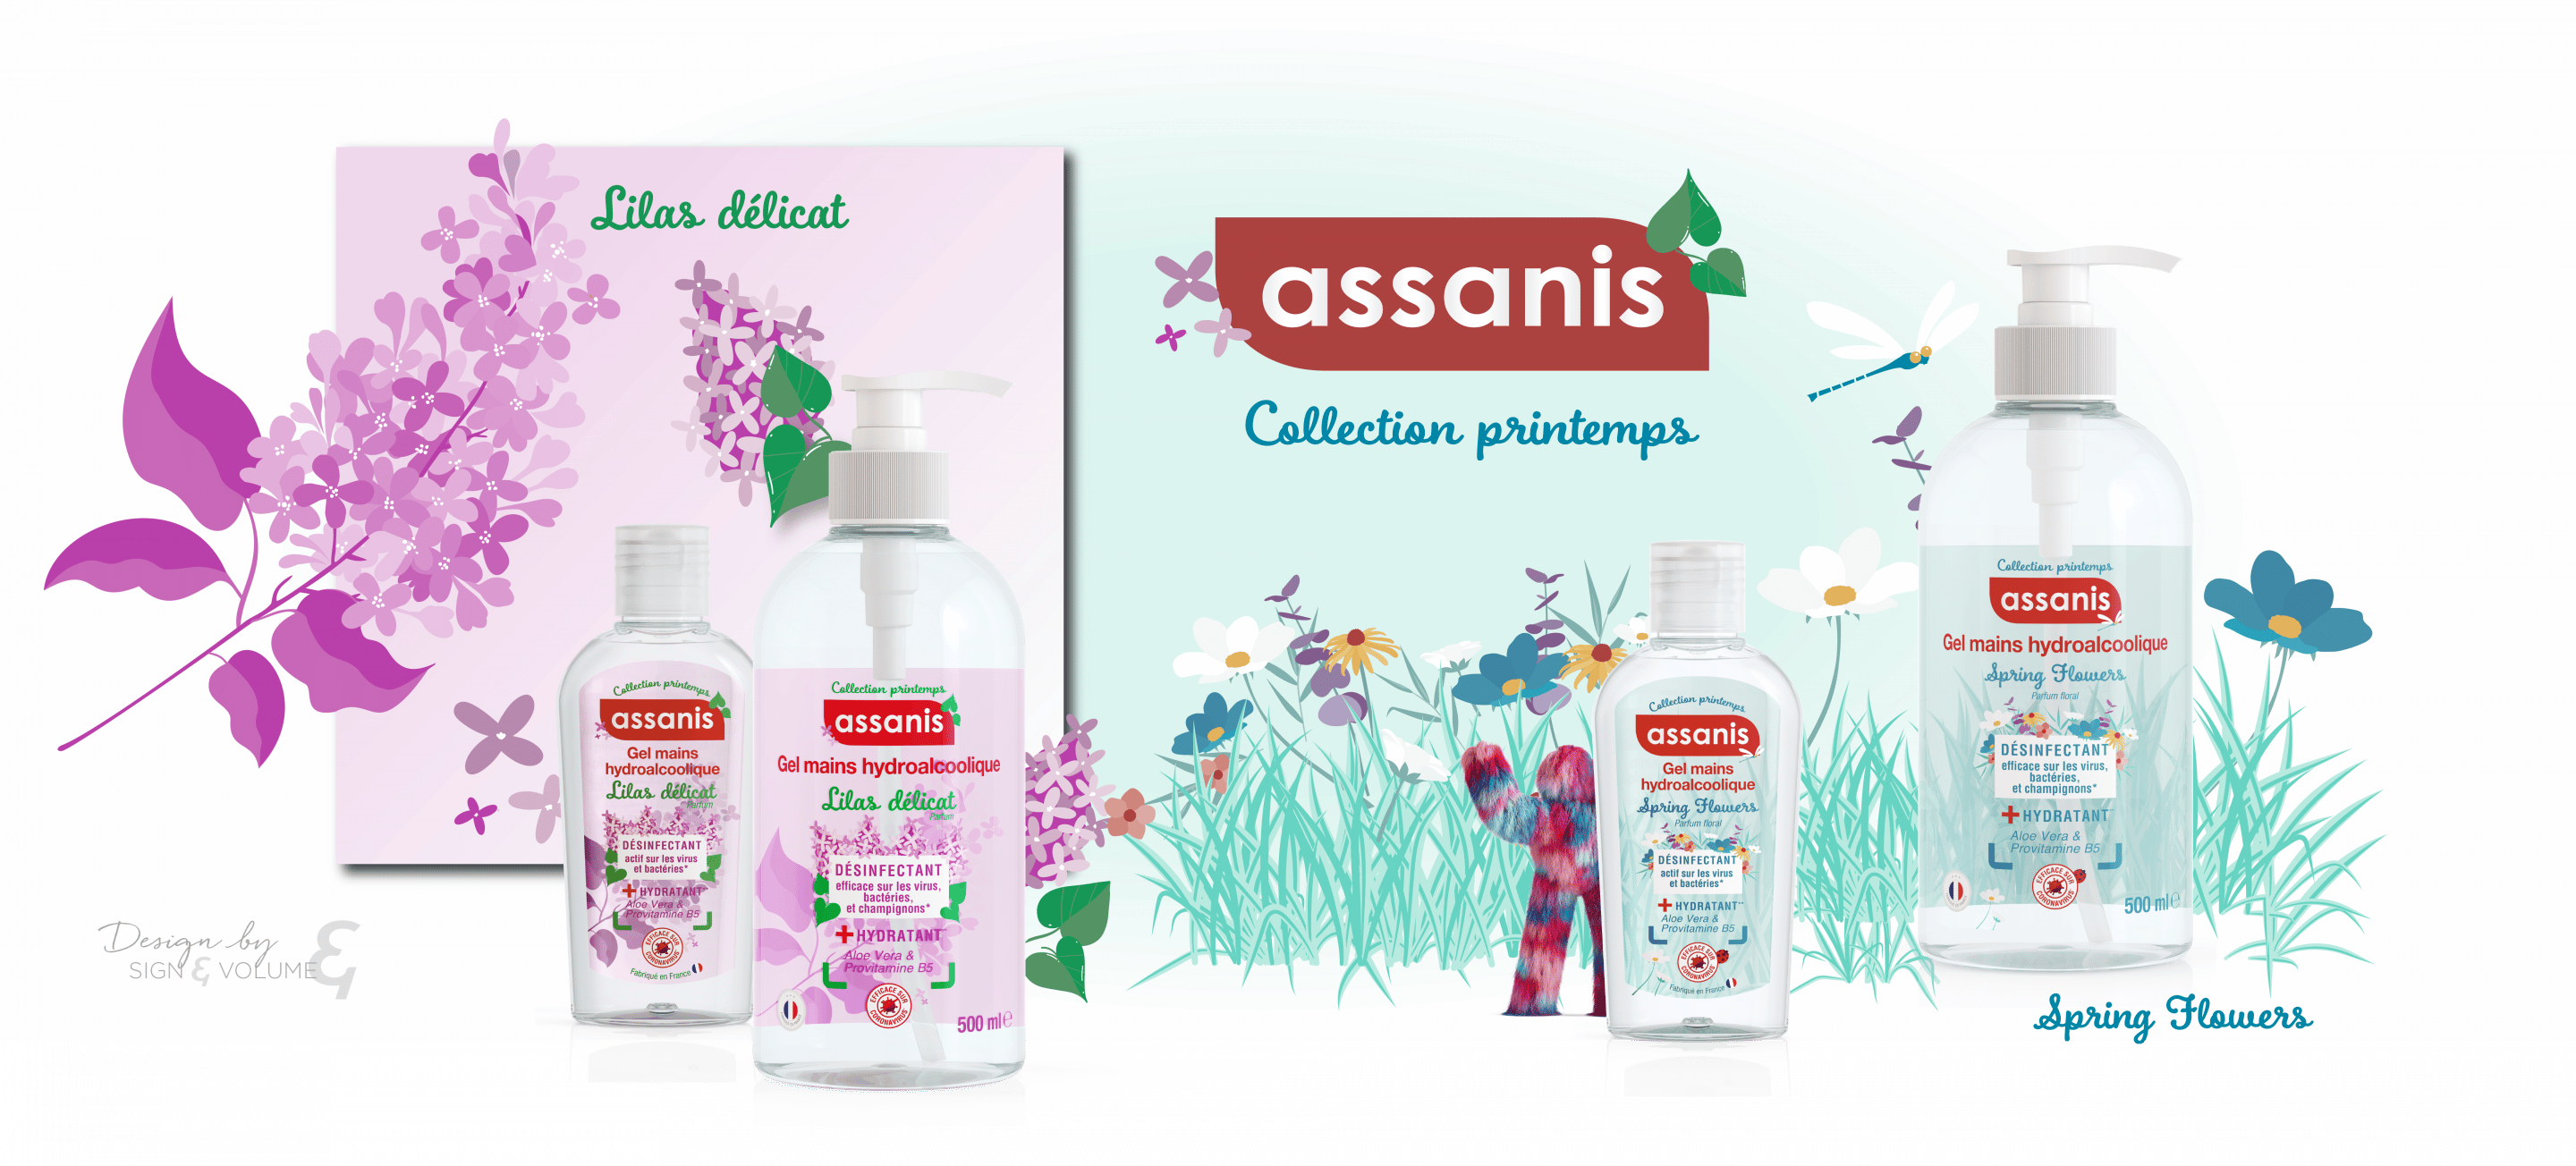 Assanis perfumed hydroalcoholic gel